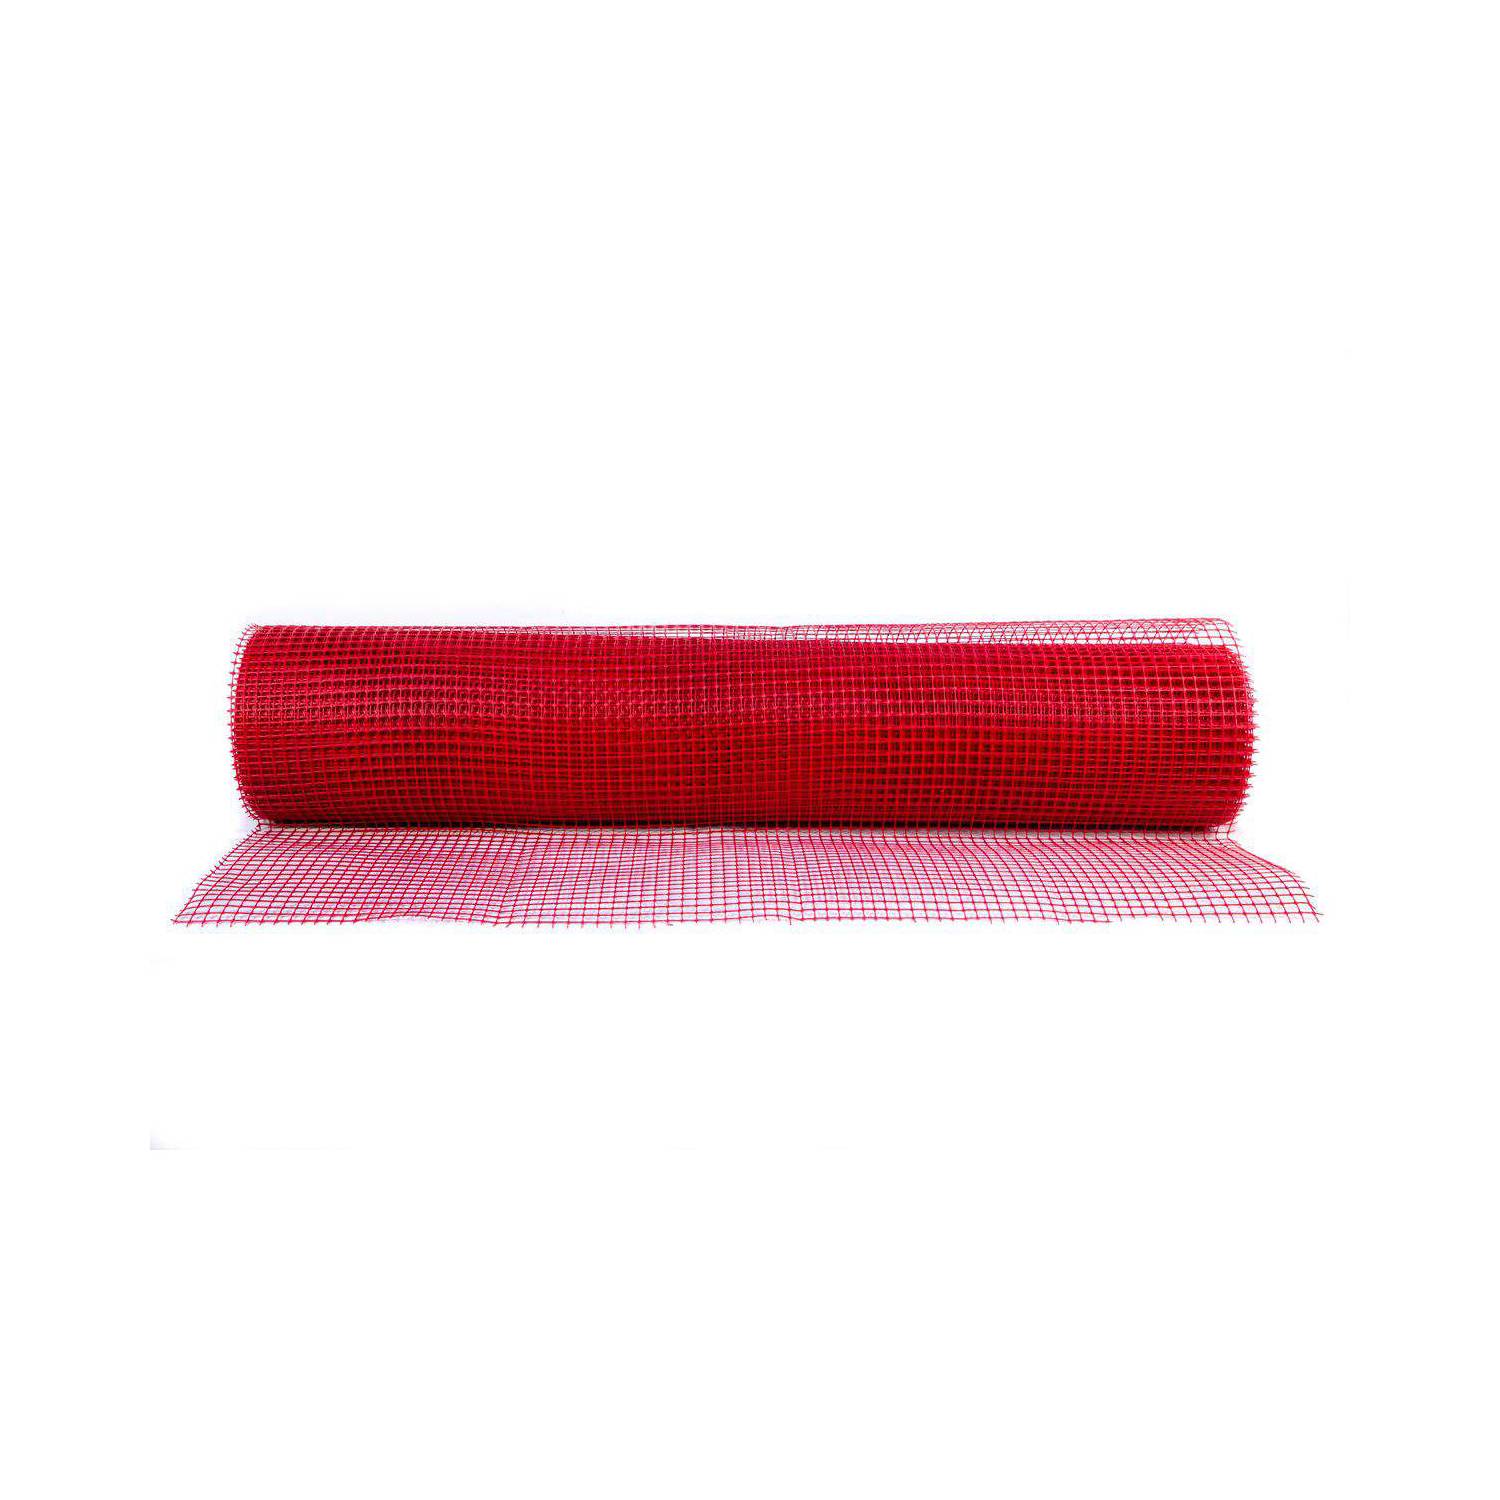 Malla/Red Pajarera Plástico (Rollo 25 m.) - Salleras Tienda